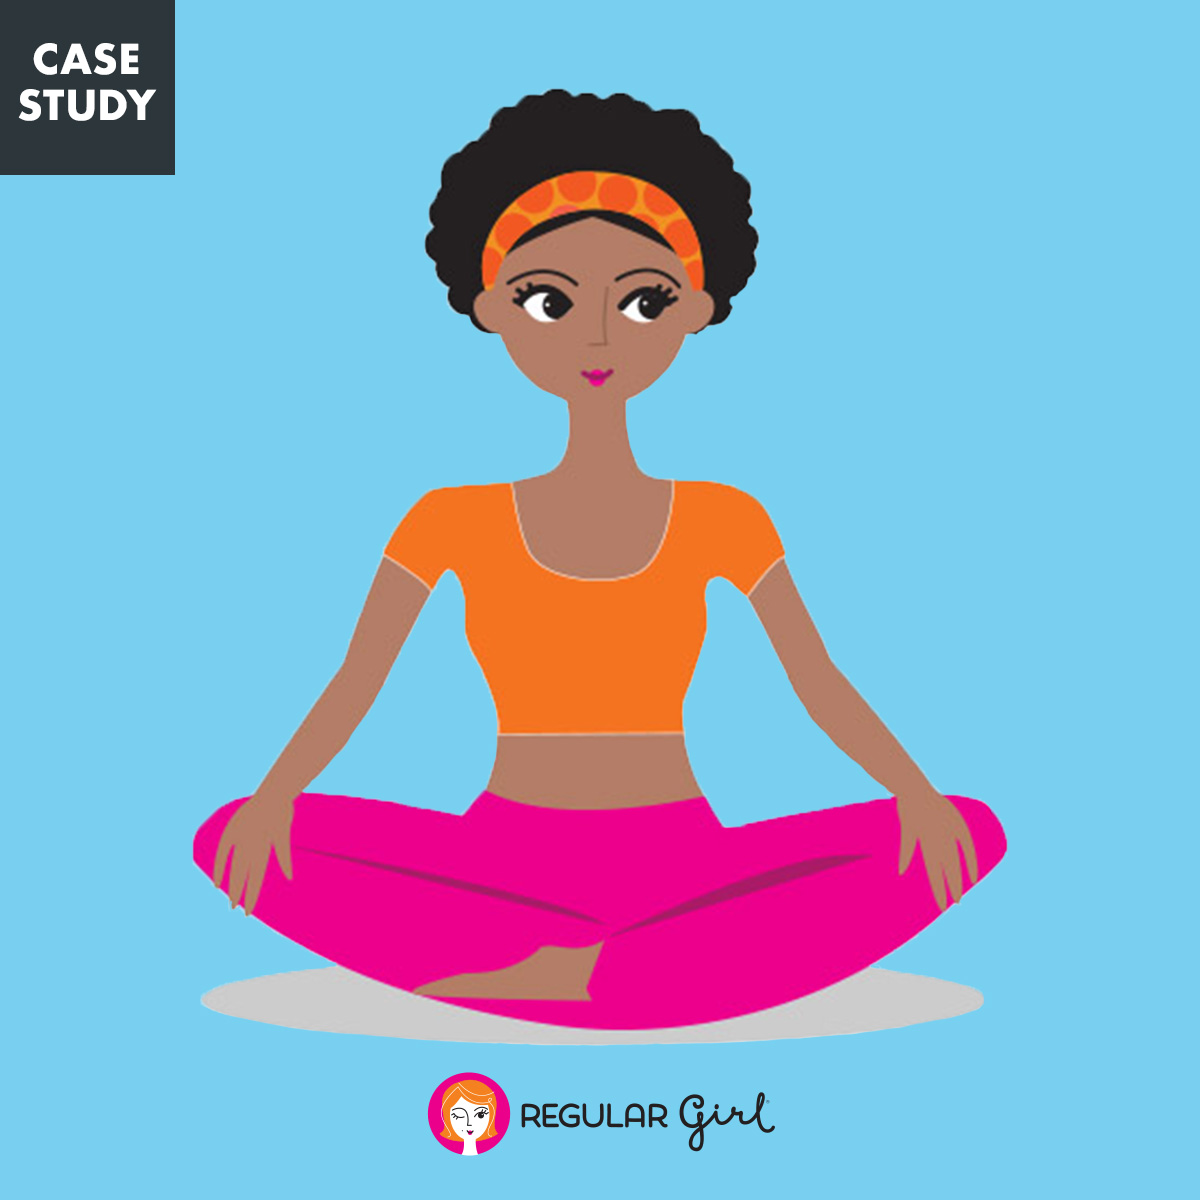 Case Study: Regular Girl woman meditating